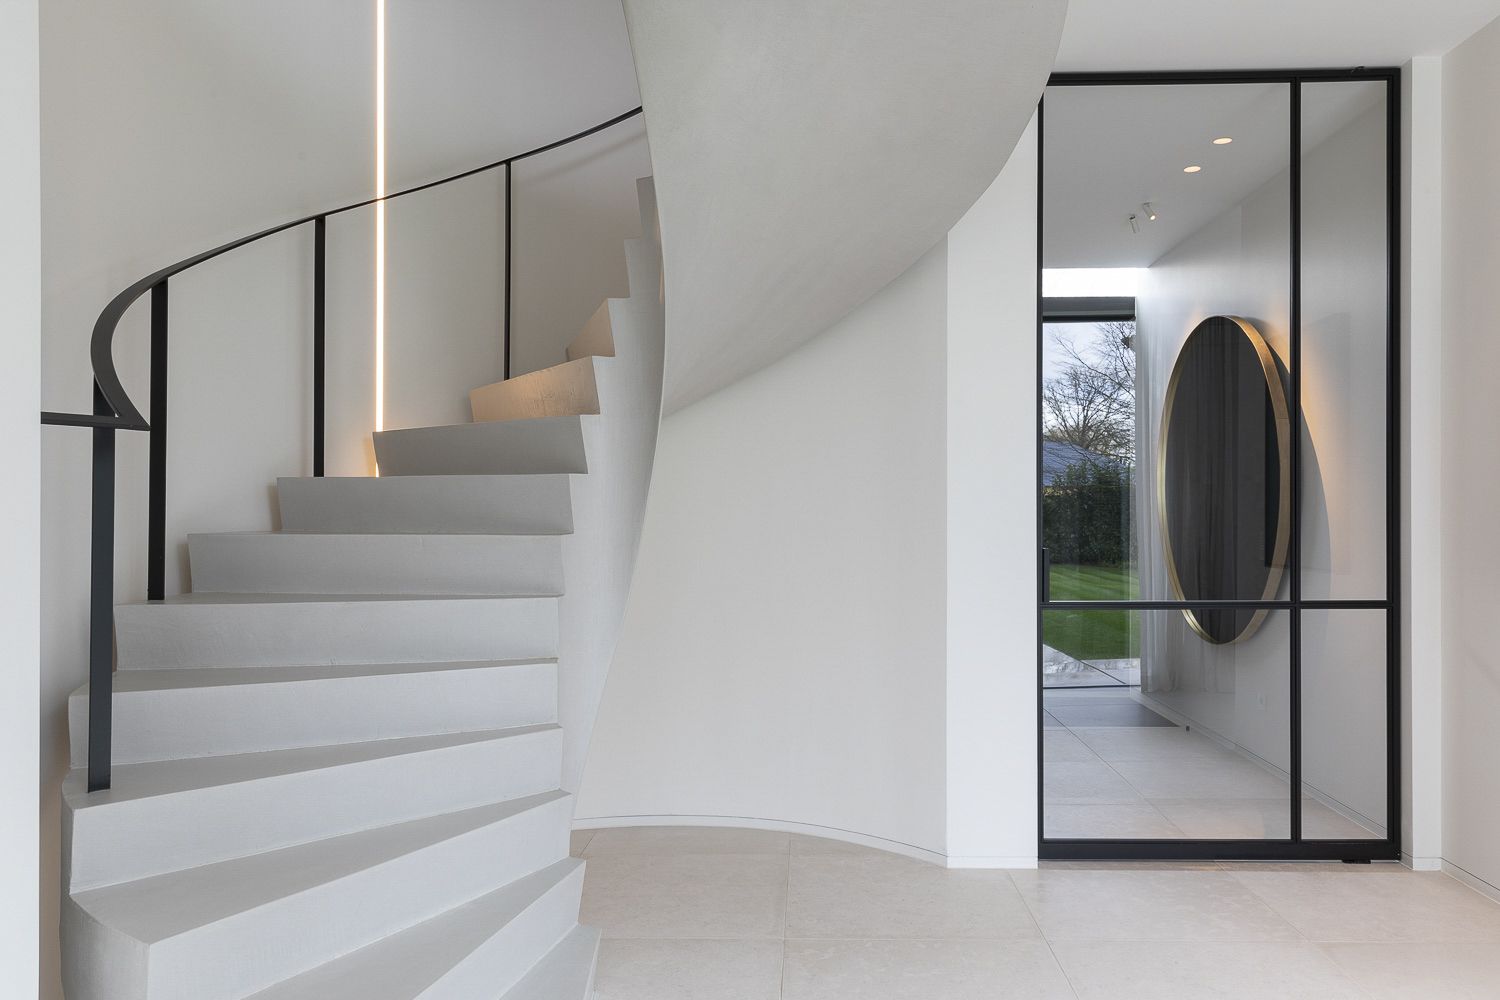 A spiral staircase in a modern home.